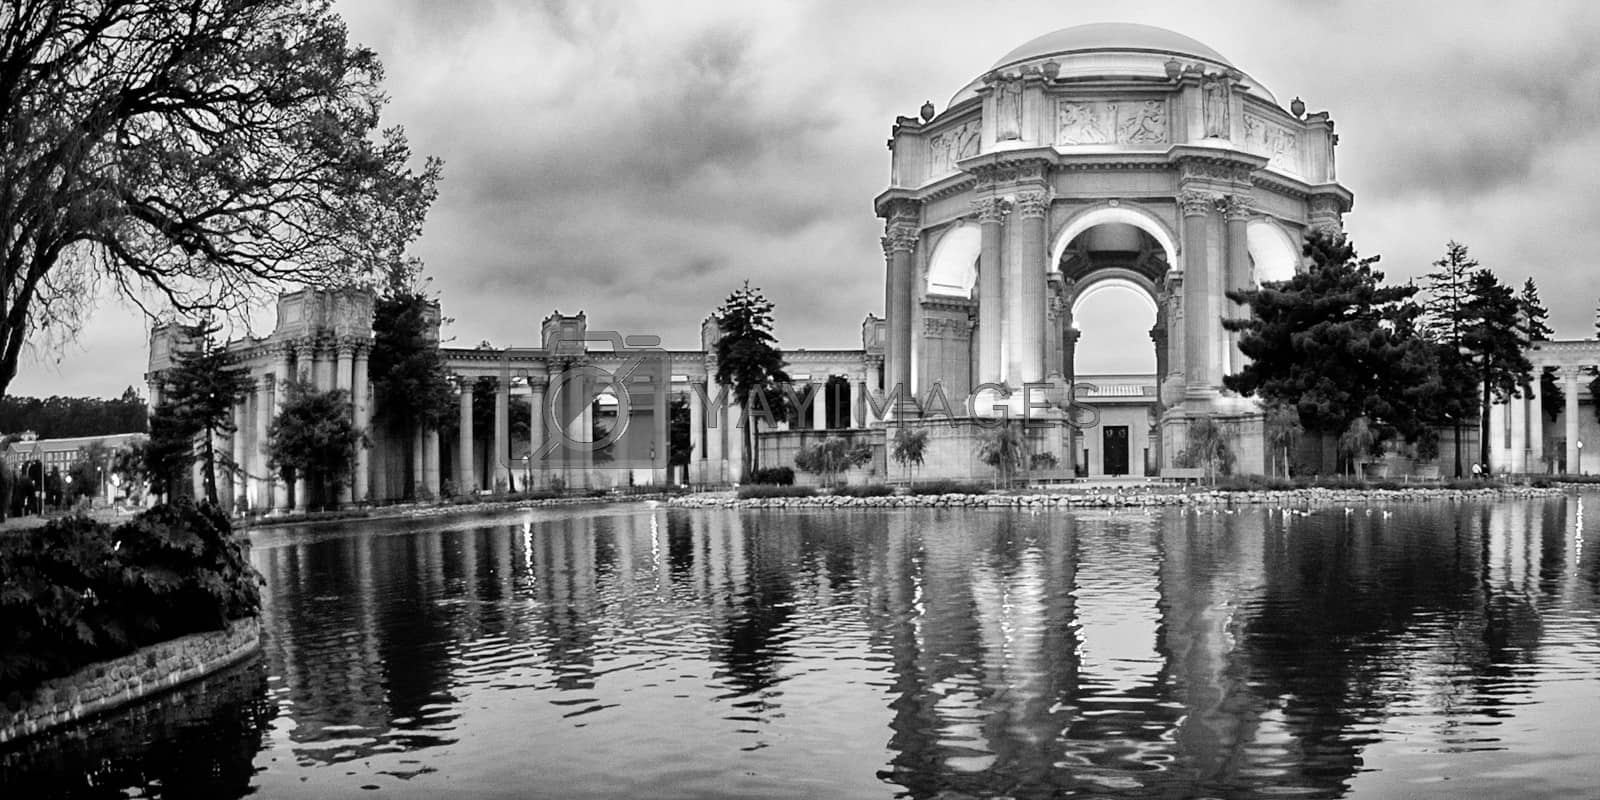 Royalty free image of Reflection of Palace Of Fine Arts, Marina District, San Francisc by CelsoDiniz